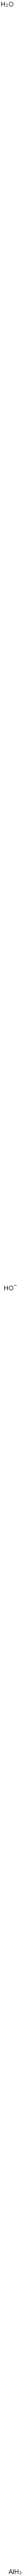 Aluminum oxide hydroxide Structure